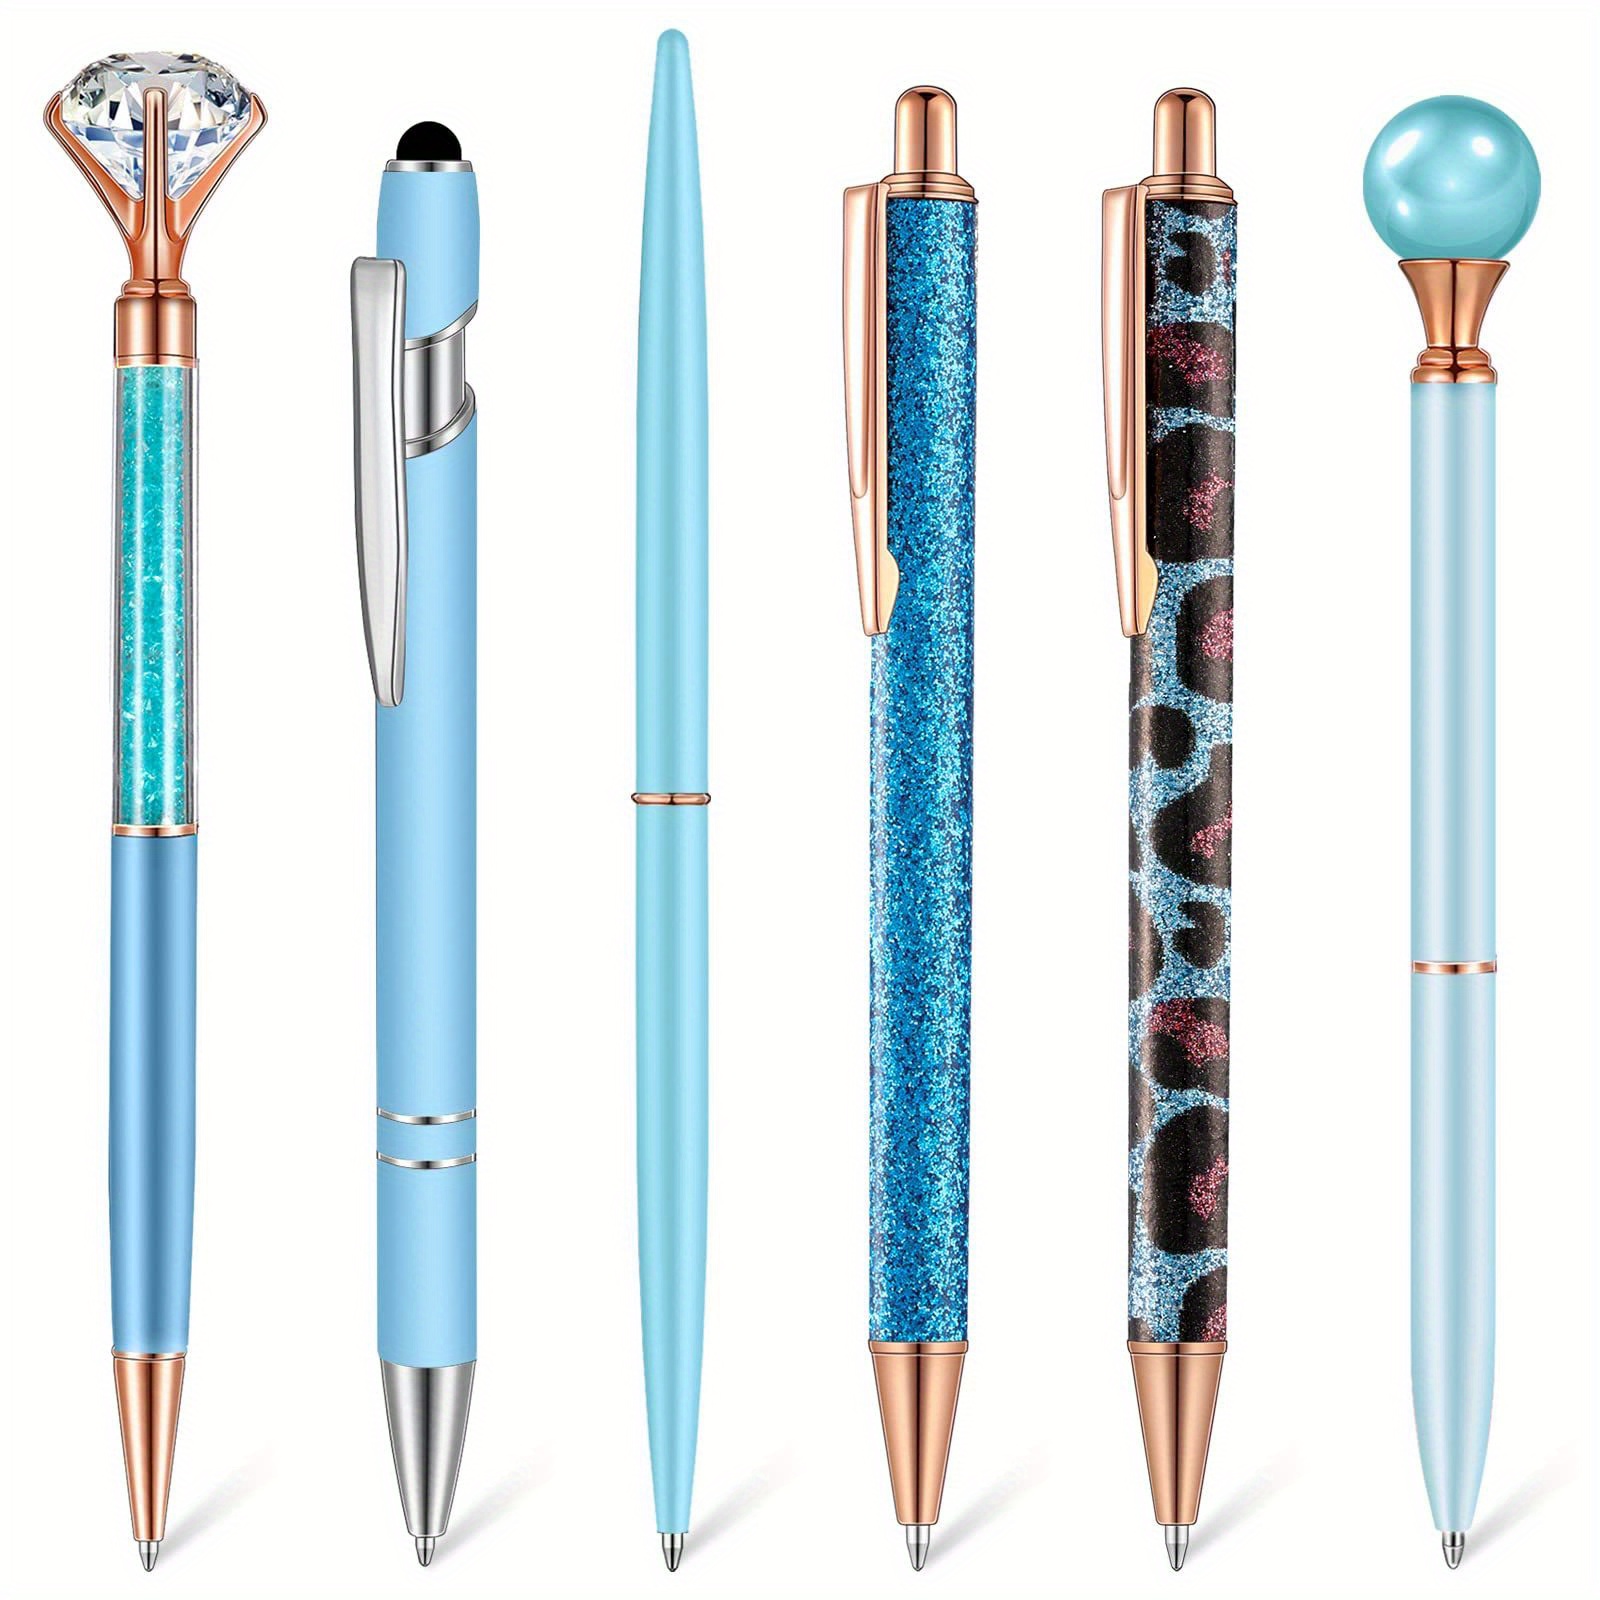 HCrystals Journaling Pen Set - 3pcs Healing Crystals Rose Gold Pens - Fancy  Pens, Diamond Pens, Witchy gifts, Inspirational Engraved Pens, Spiritual